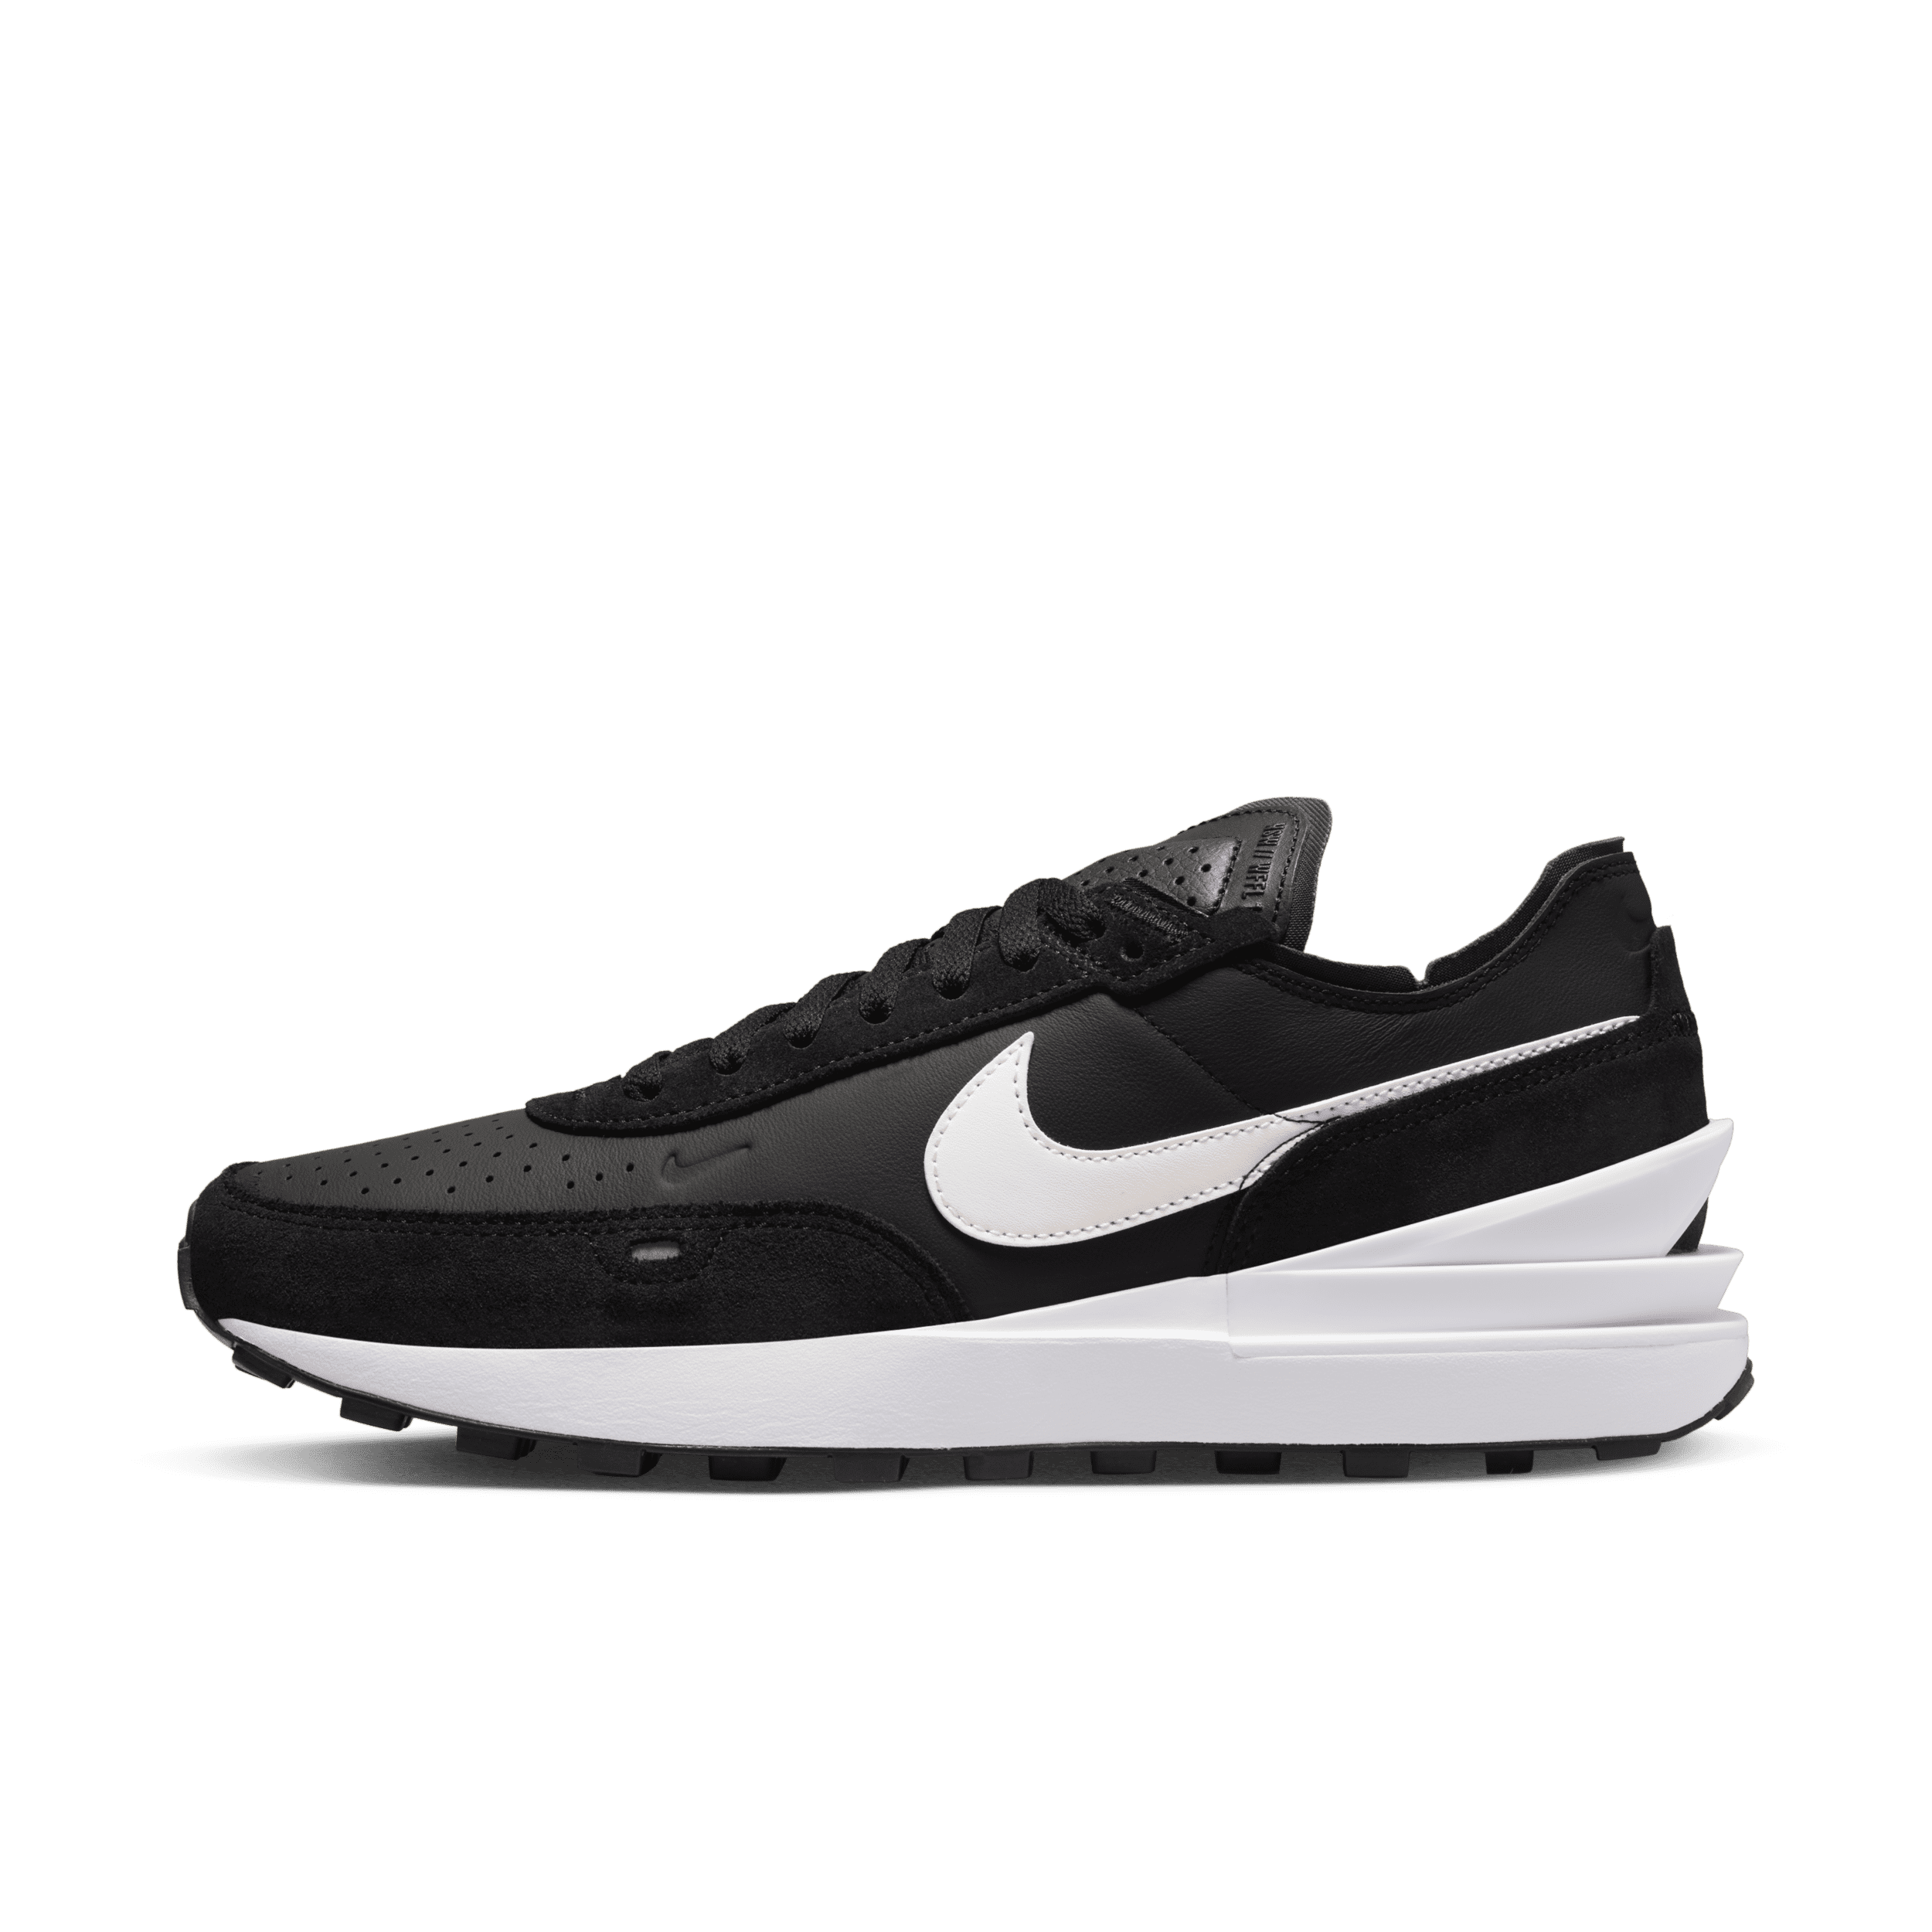 Nike Waffle One Leather Herenschoenen – Zwart